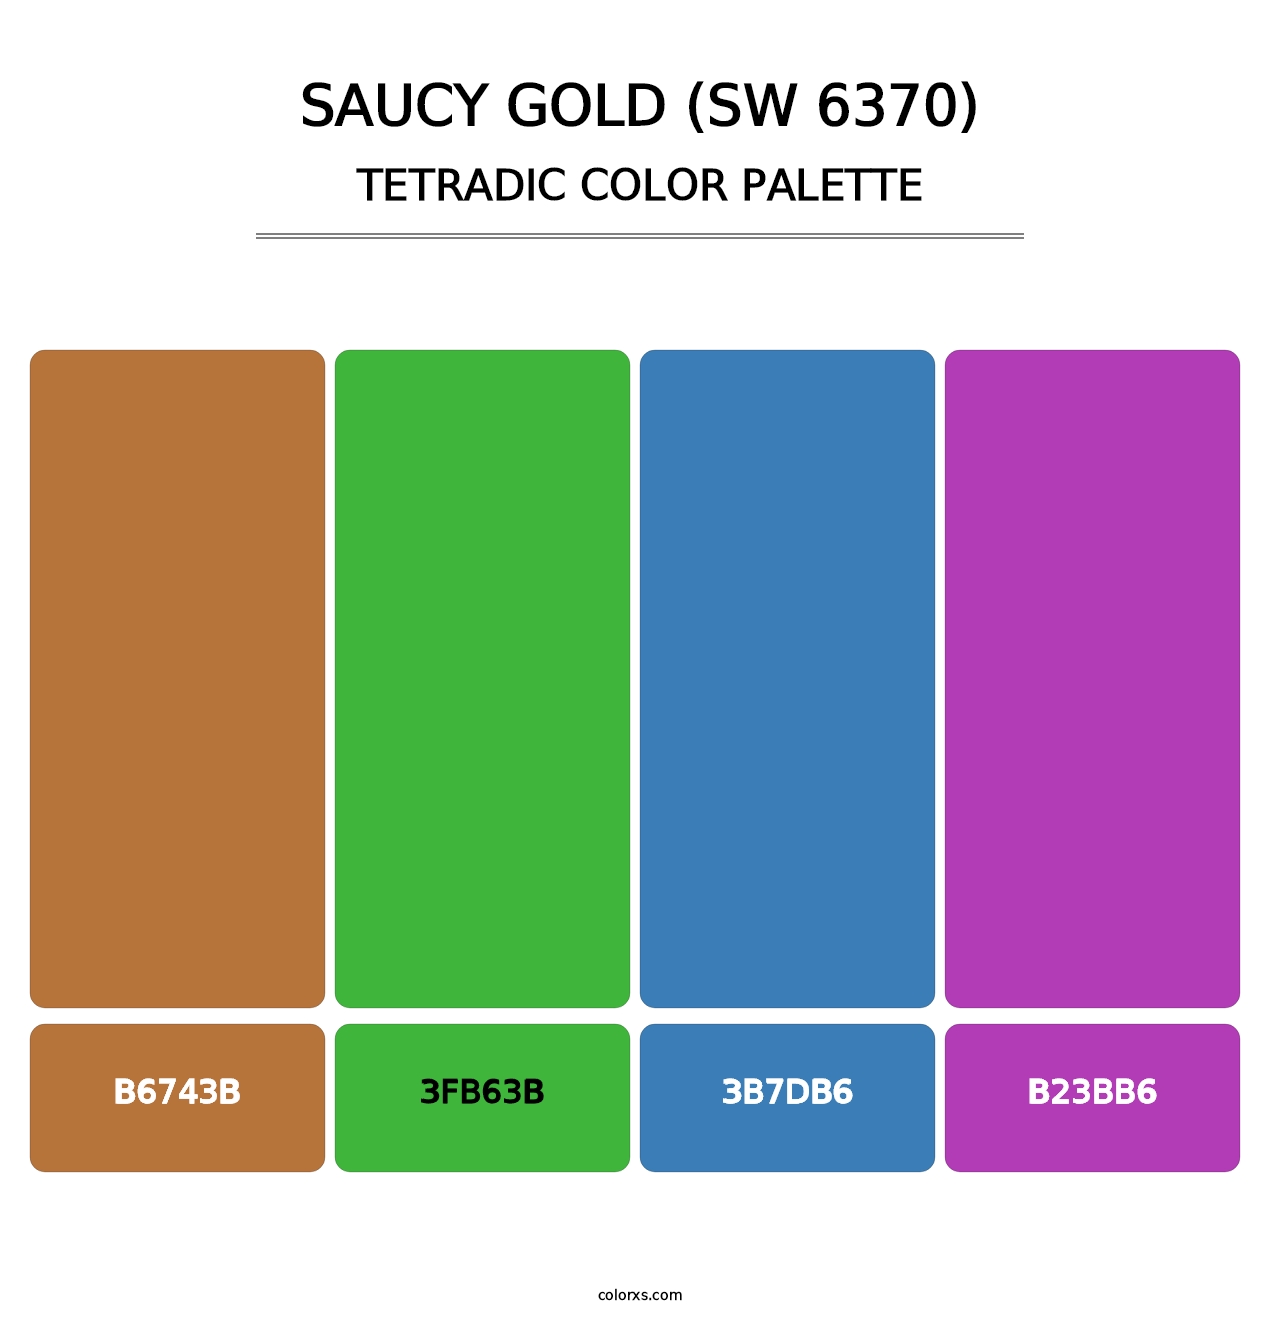 Saucy Gold (SW 6370) - Tetradic Color Palette